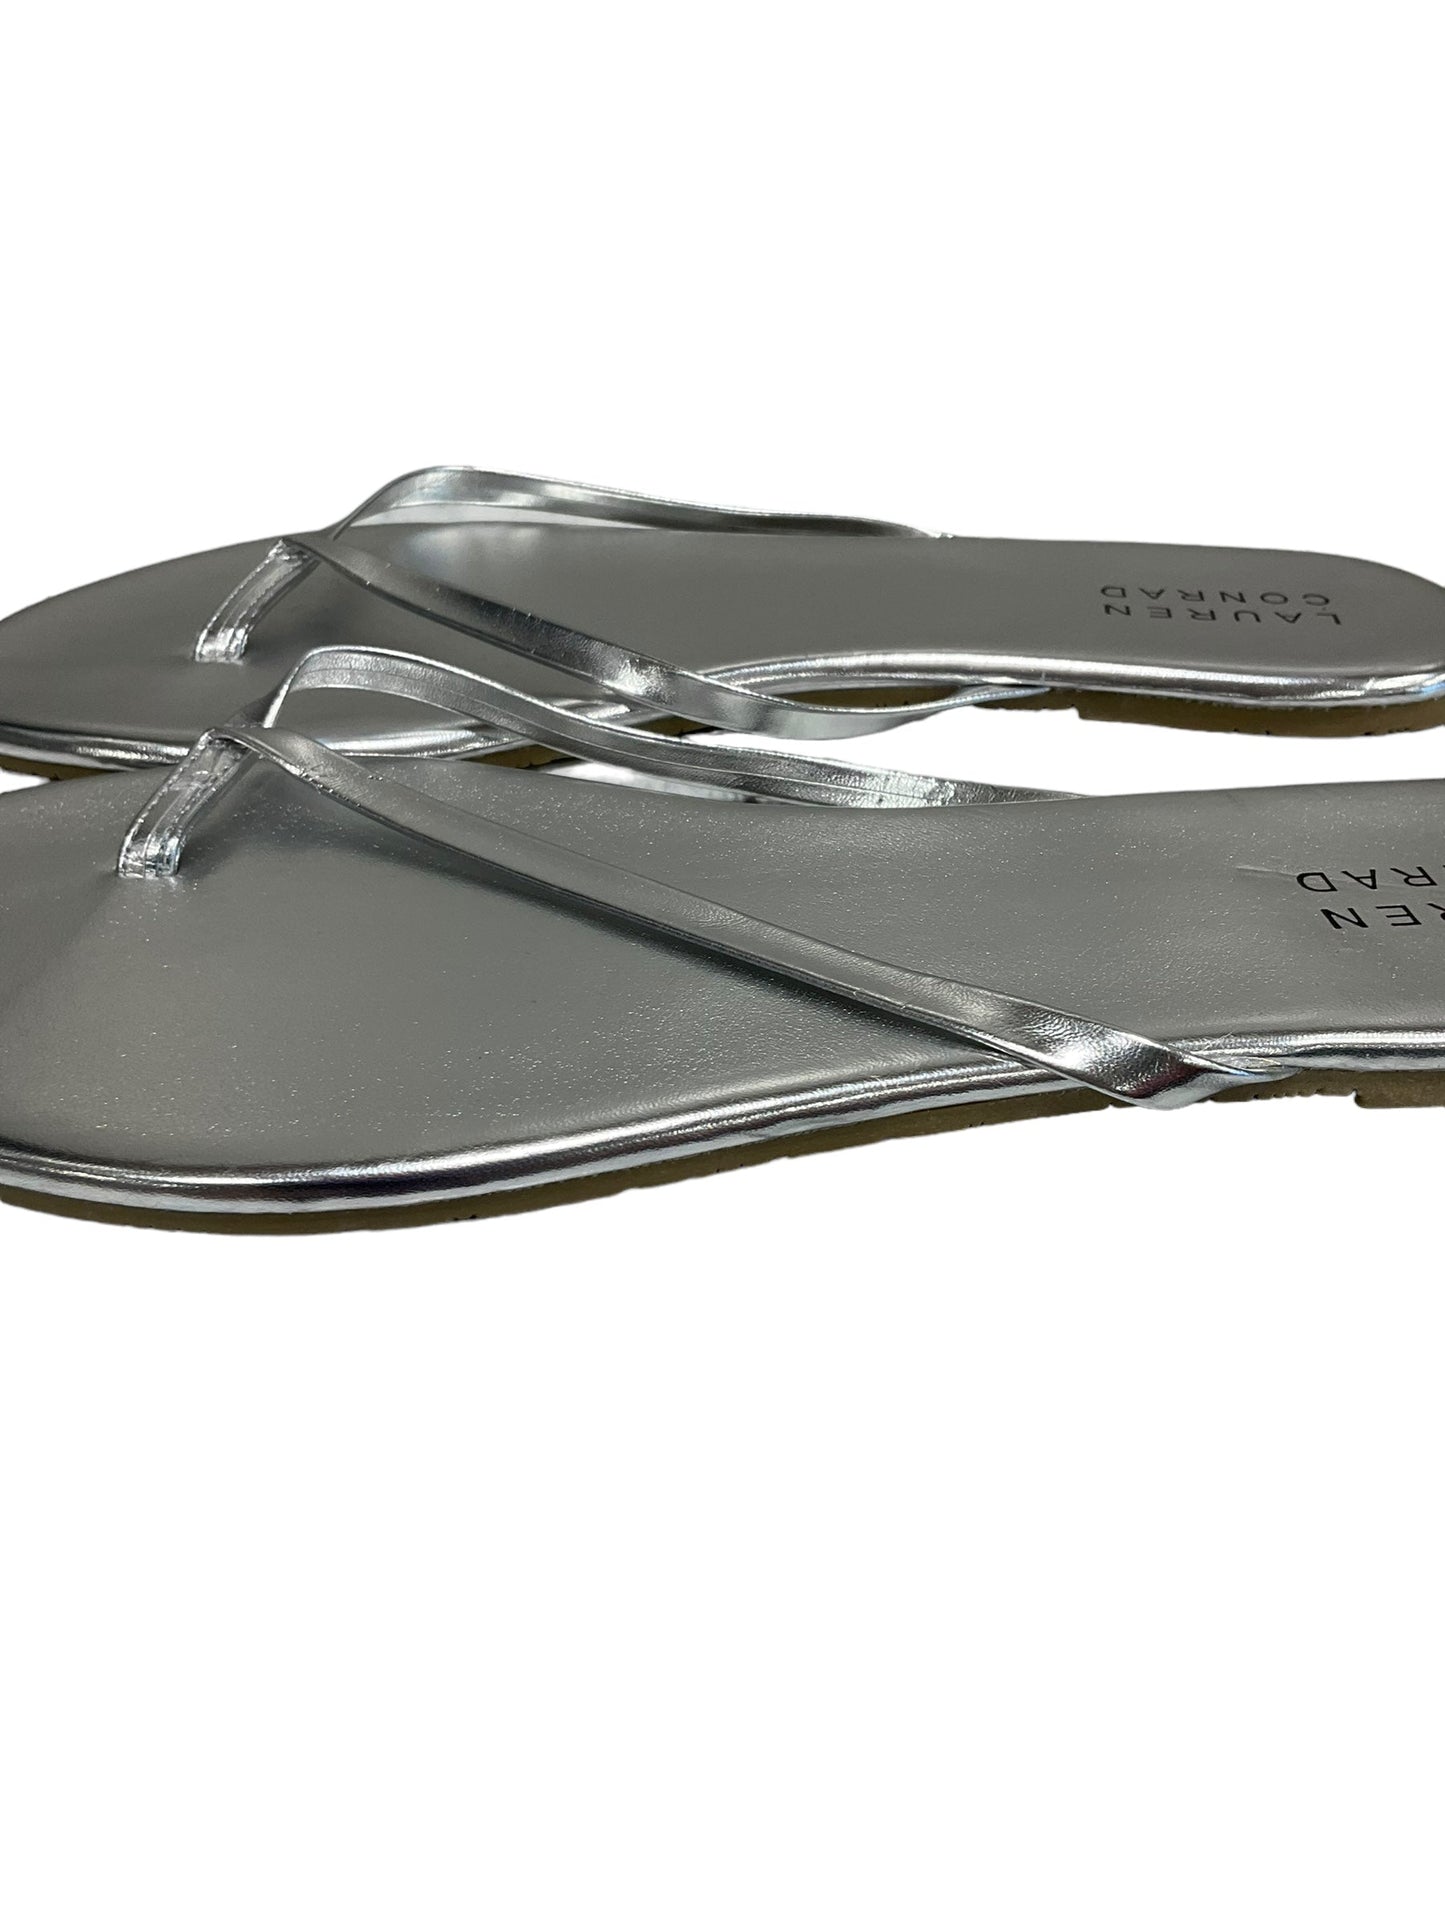 Silver Sandals Flip Flops Lc Lauren Conrad, Size 10